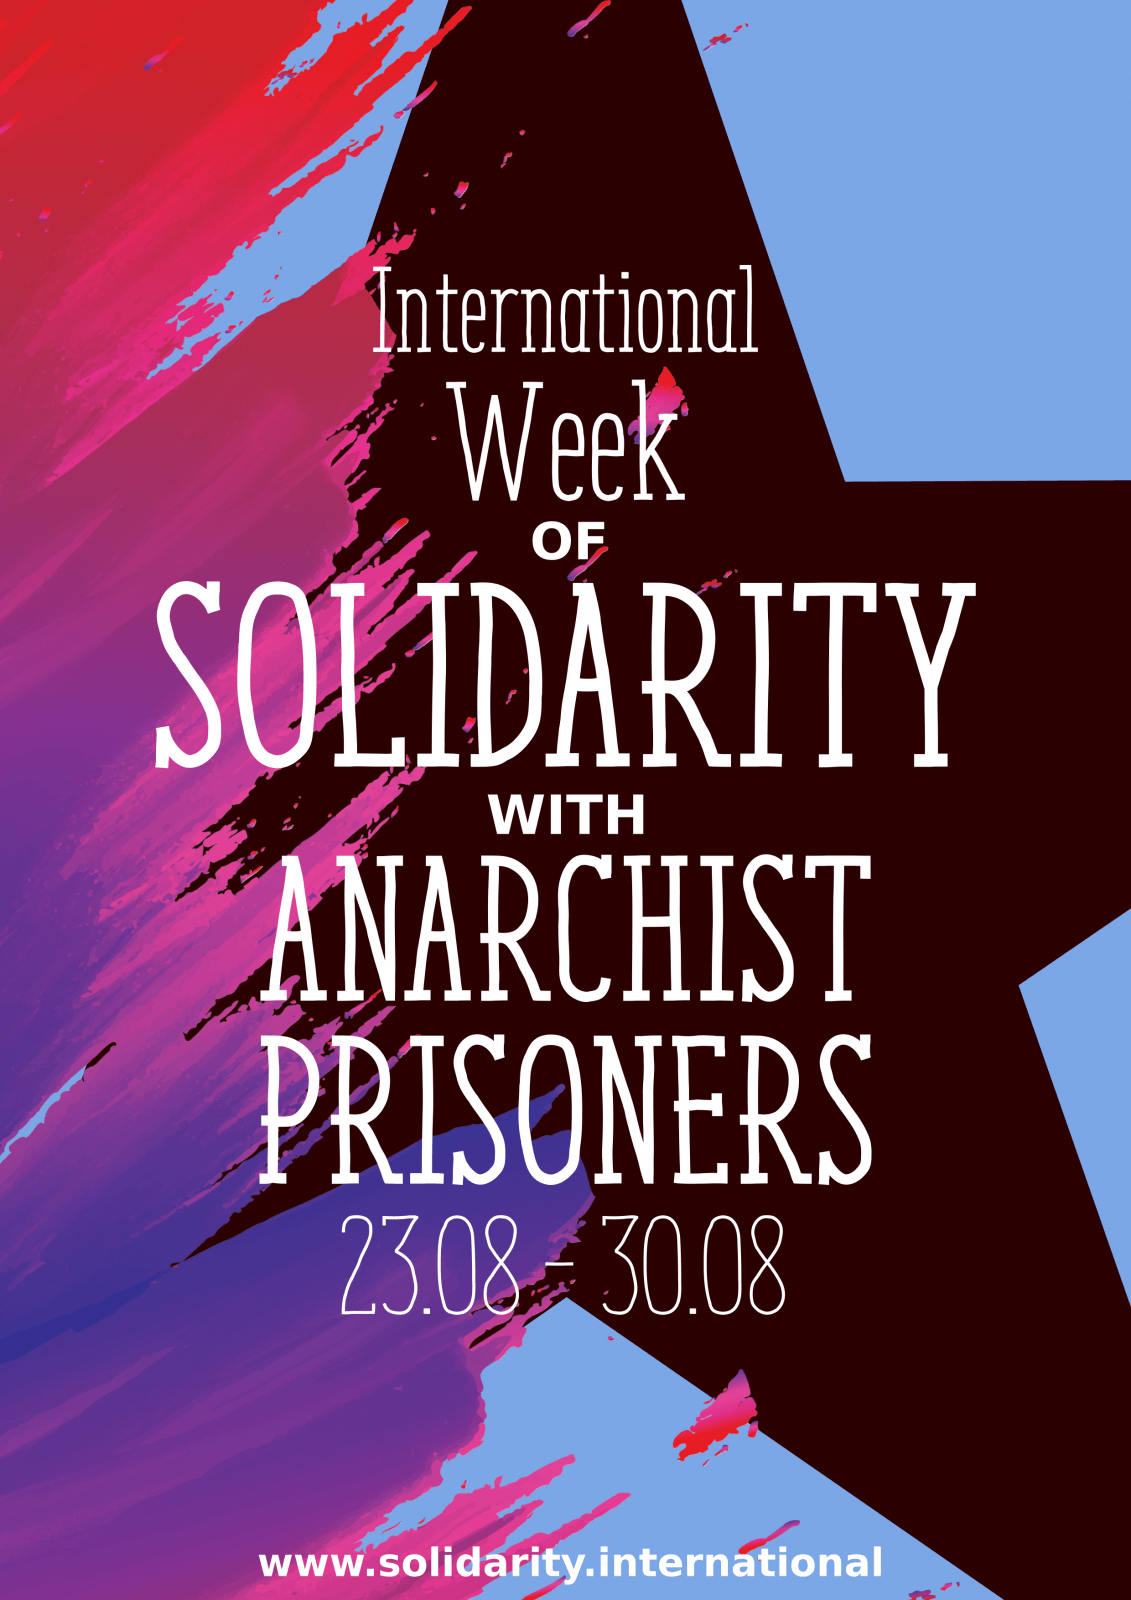 International Week of Solidarity with Anarchist Prisoner